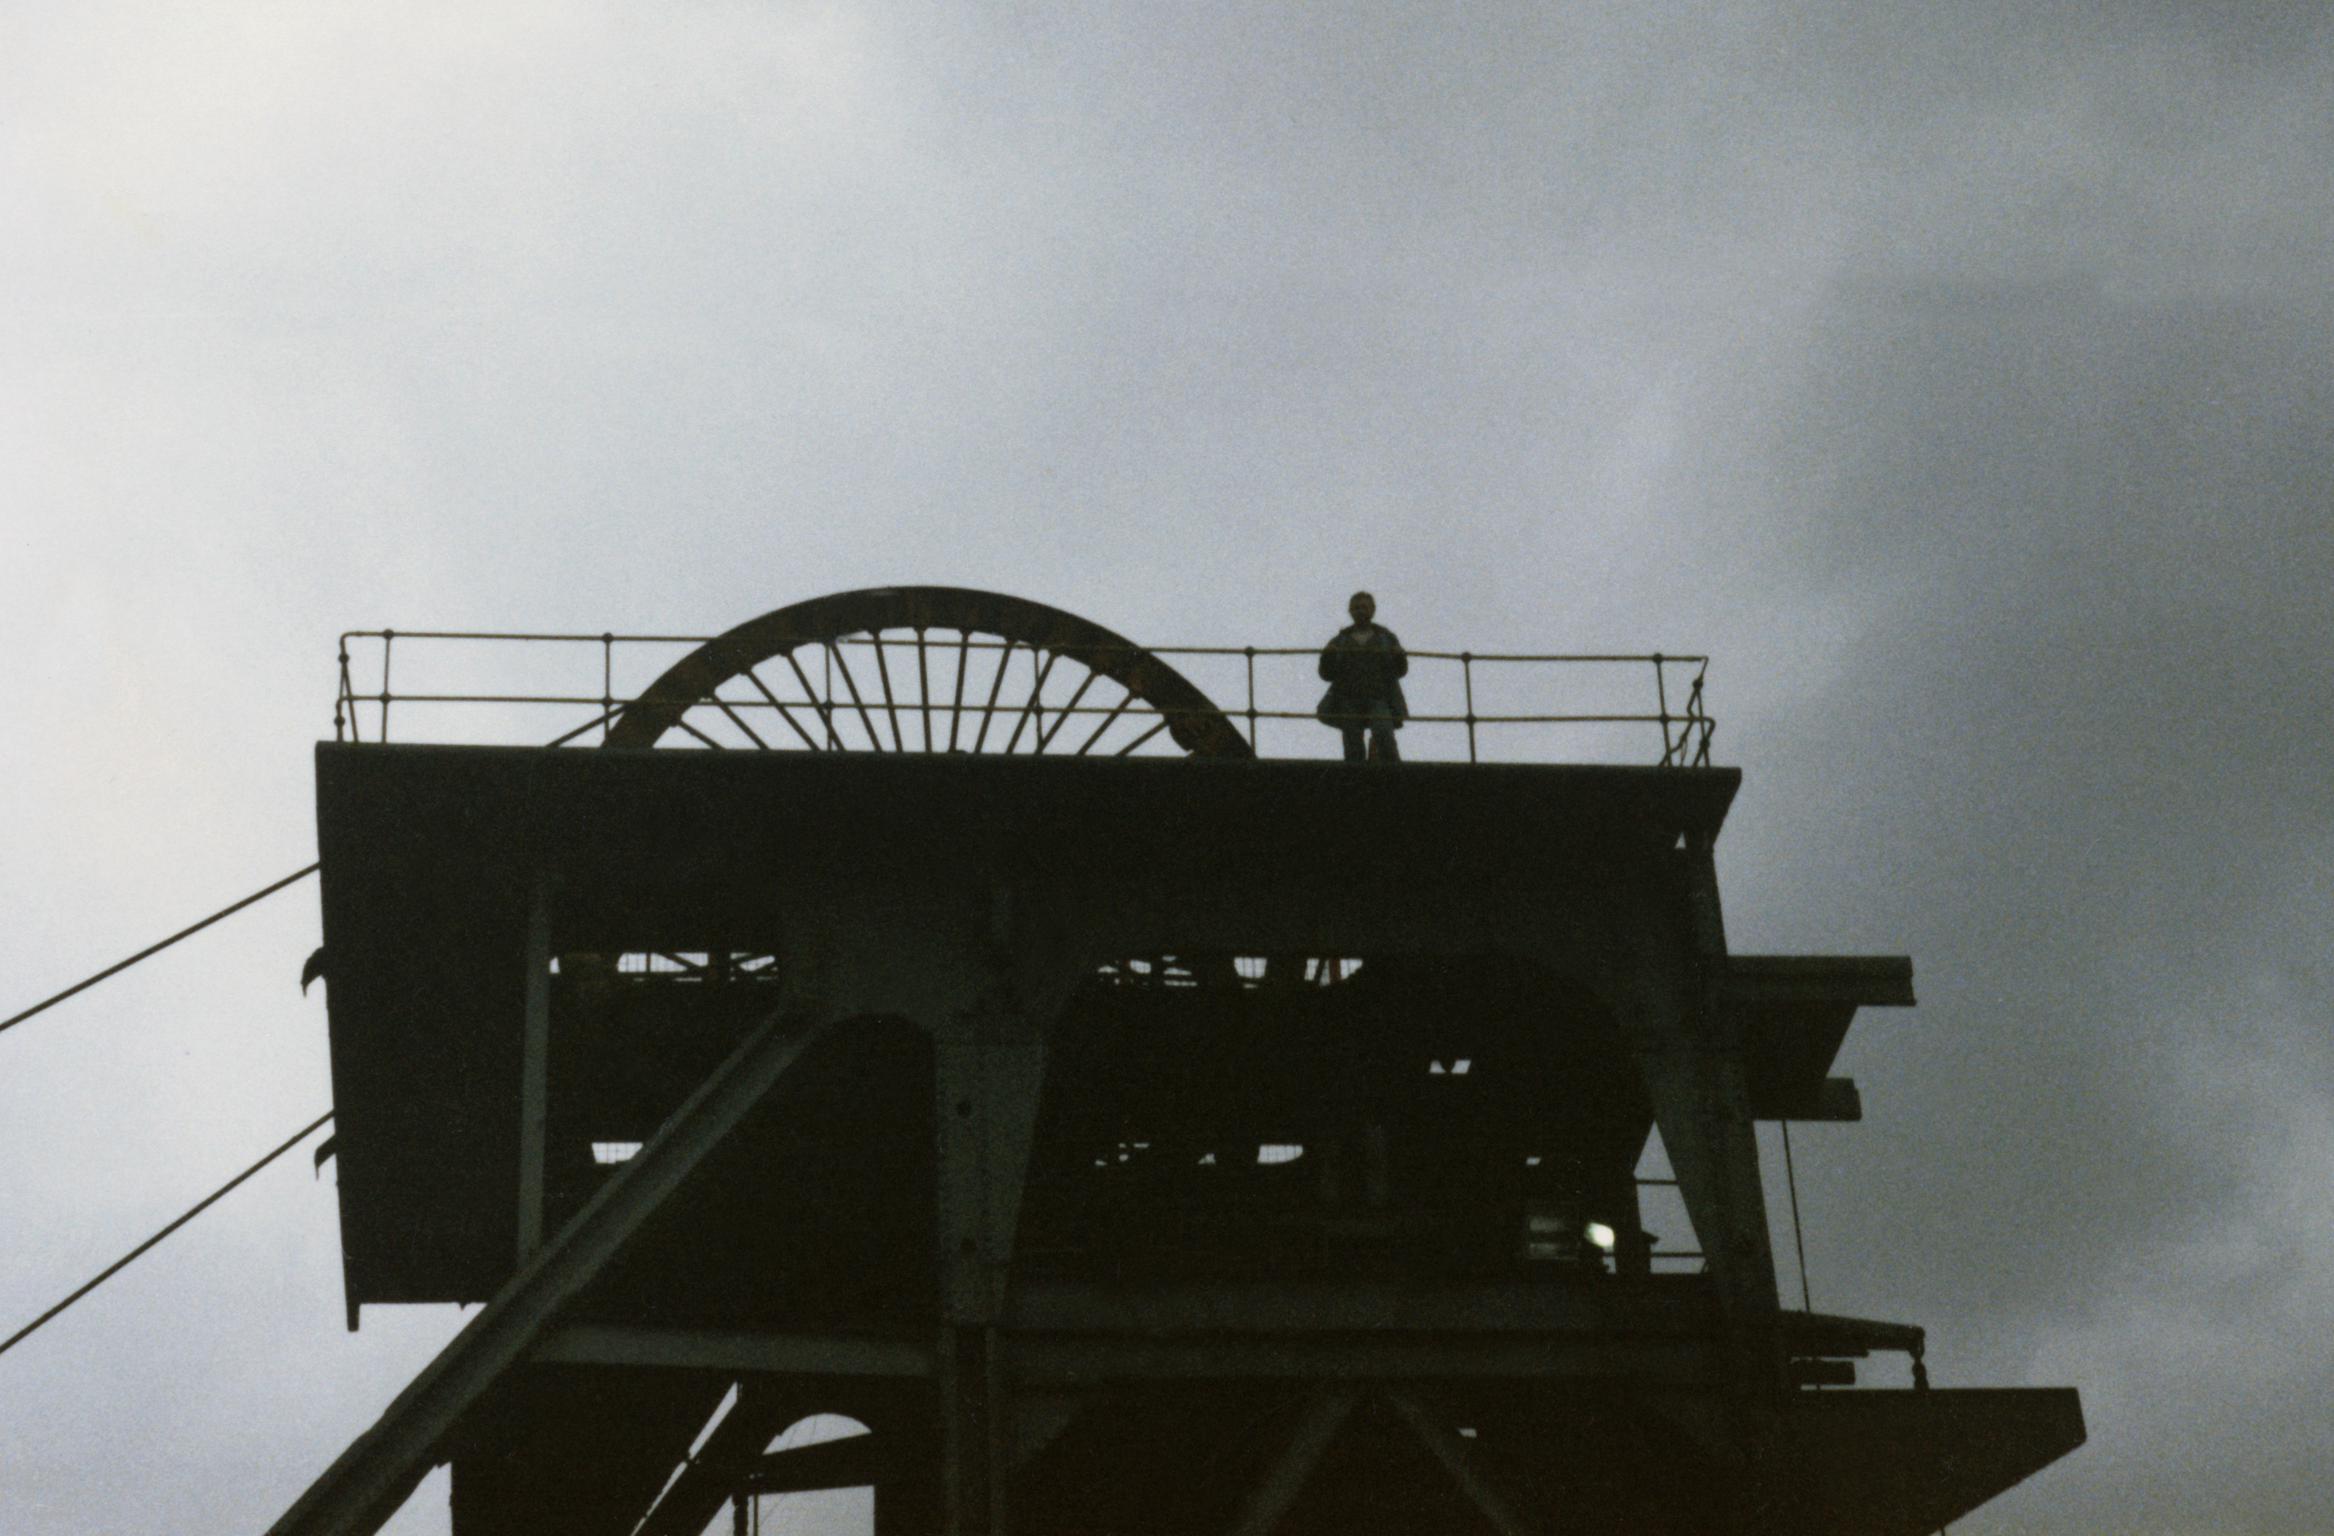 Cwm Colliery, photograph